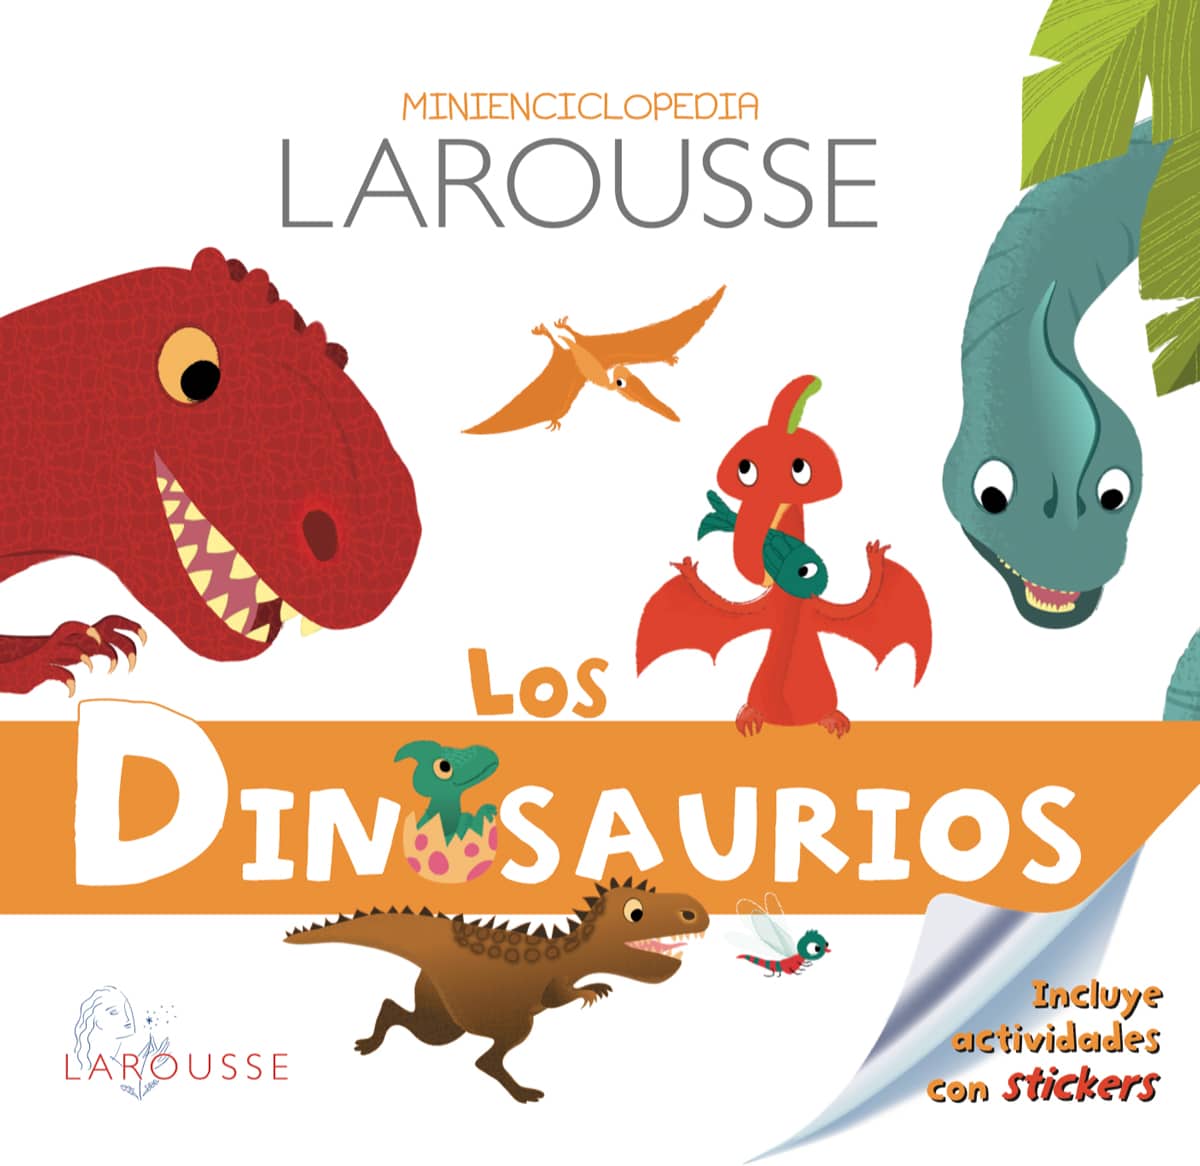 Mini Enciclopedia Larousse Dinosaurios